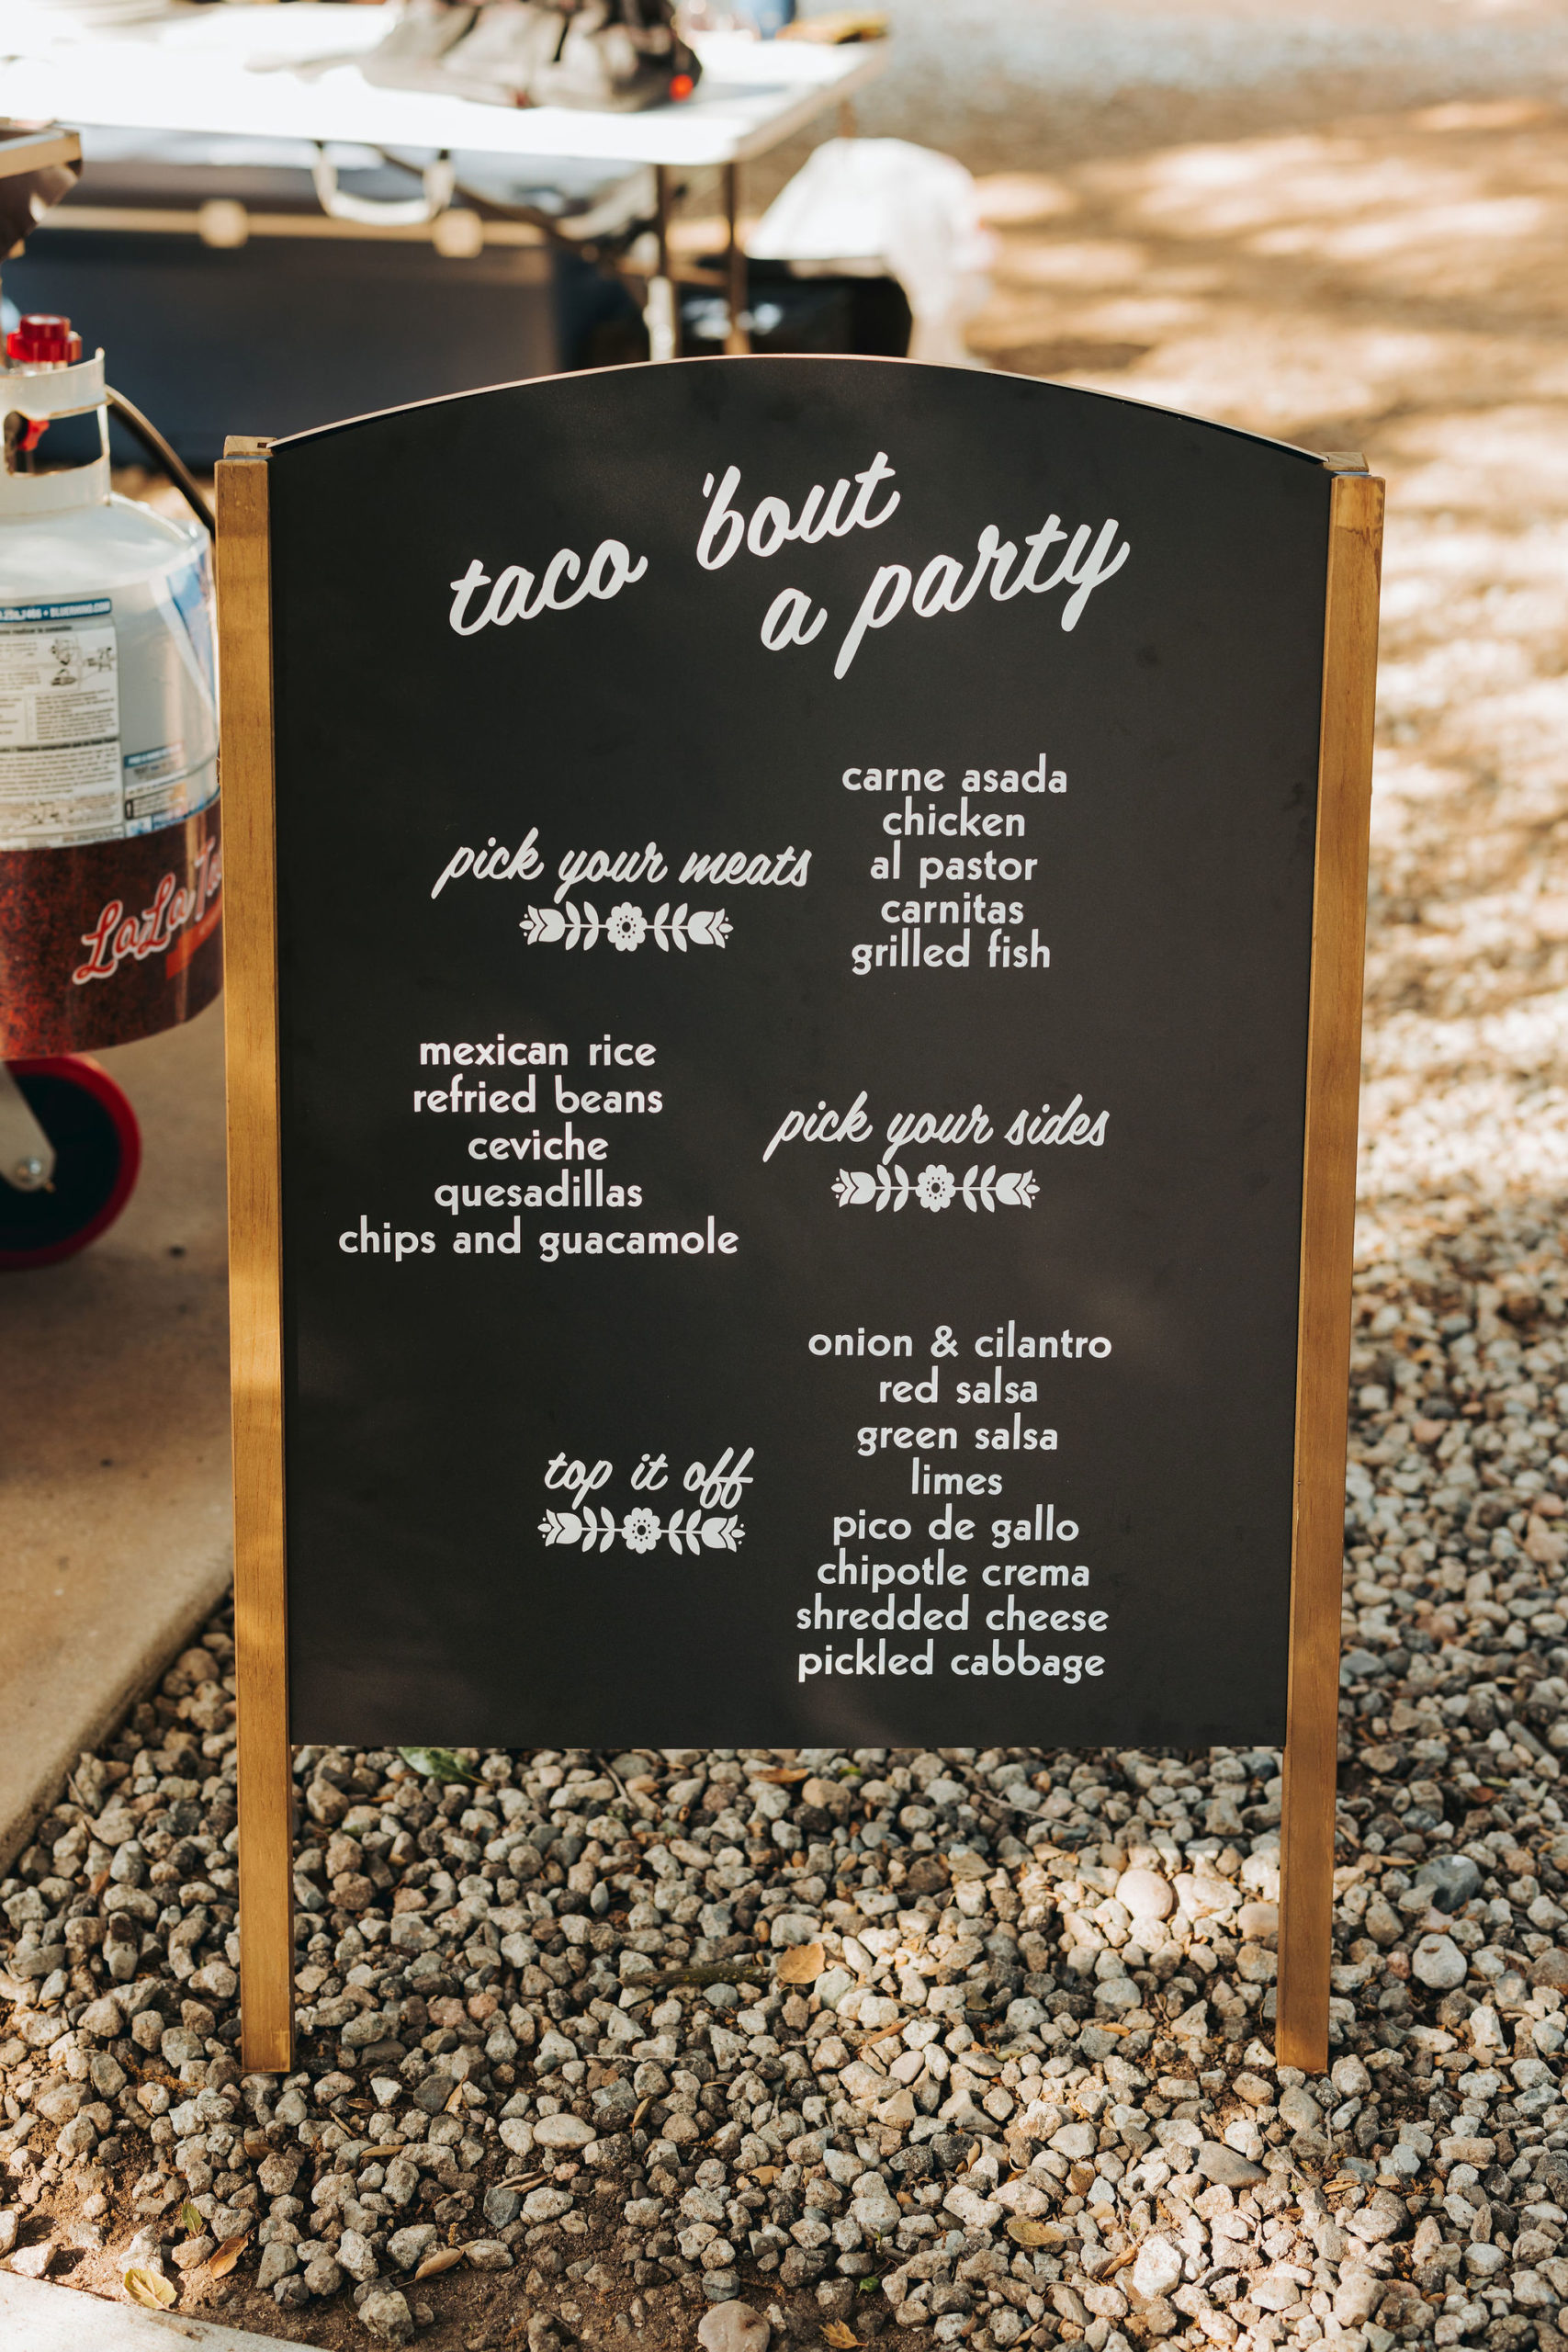 taco truck menu at wedding reception